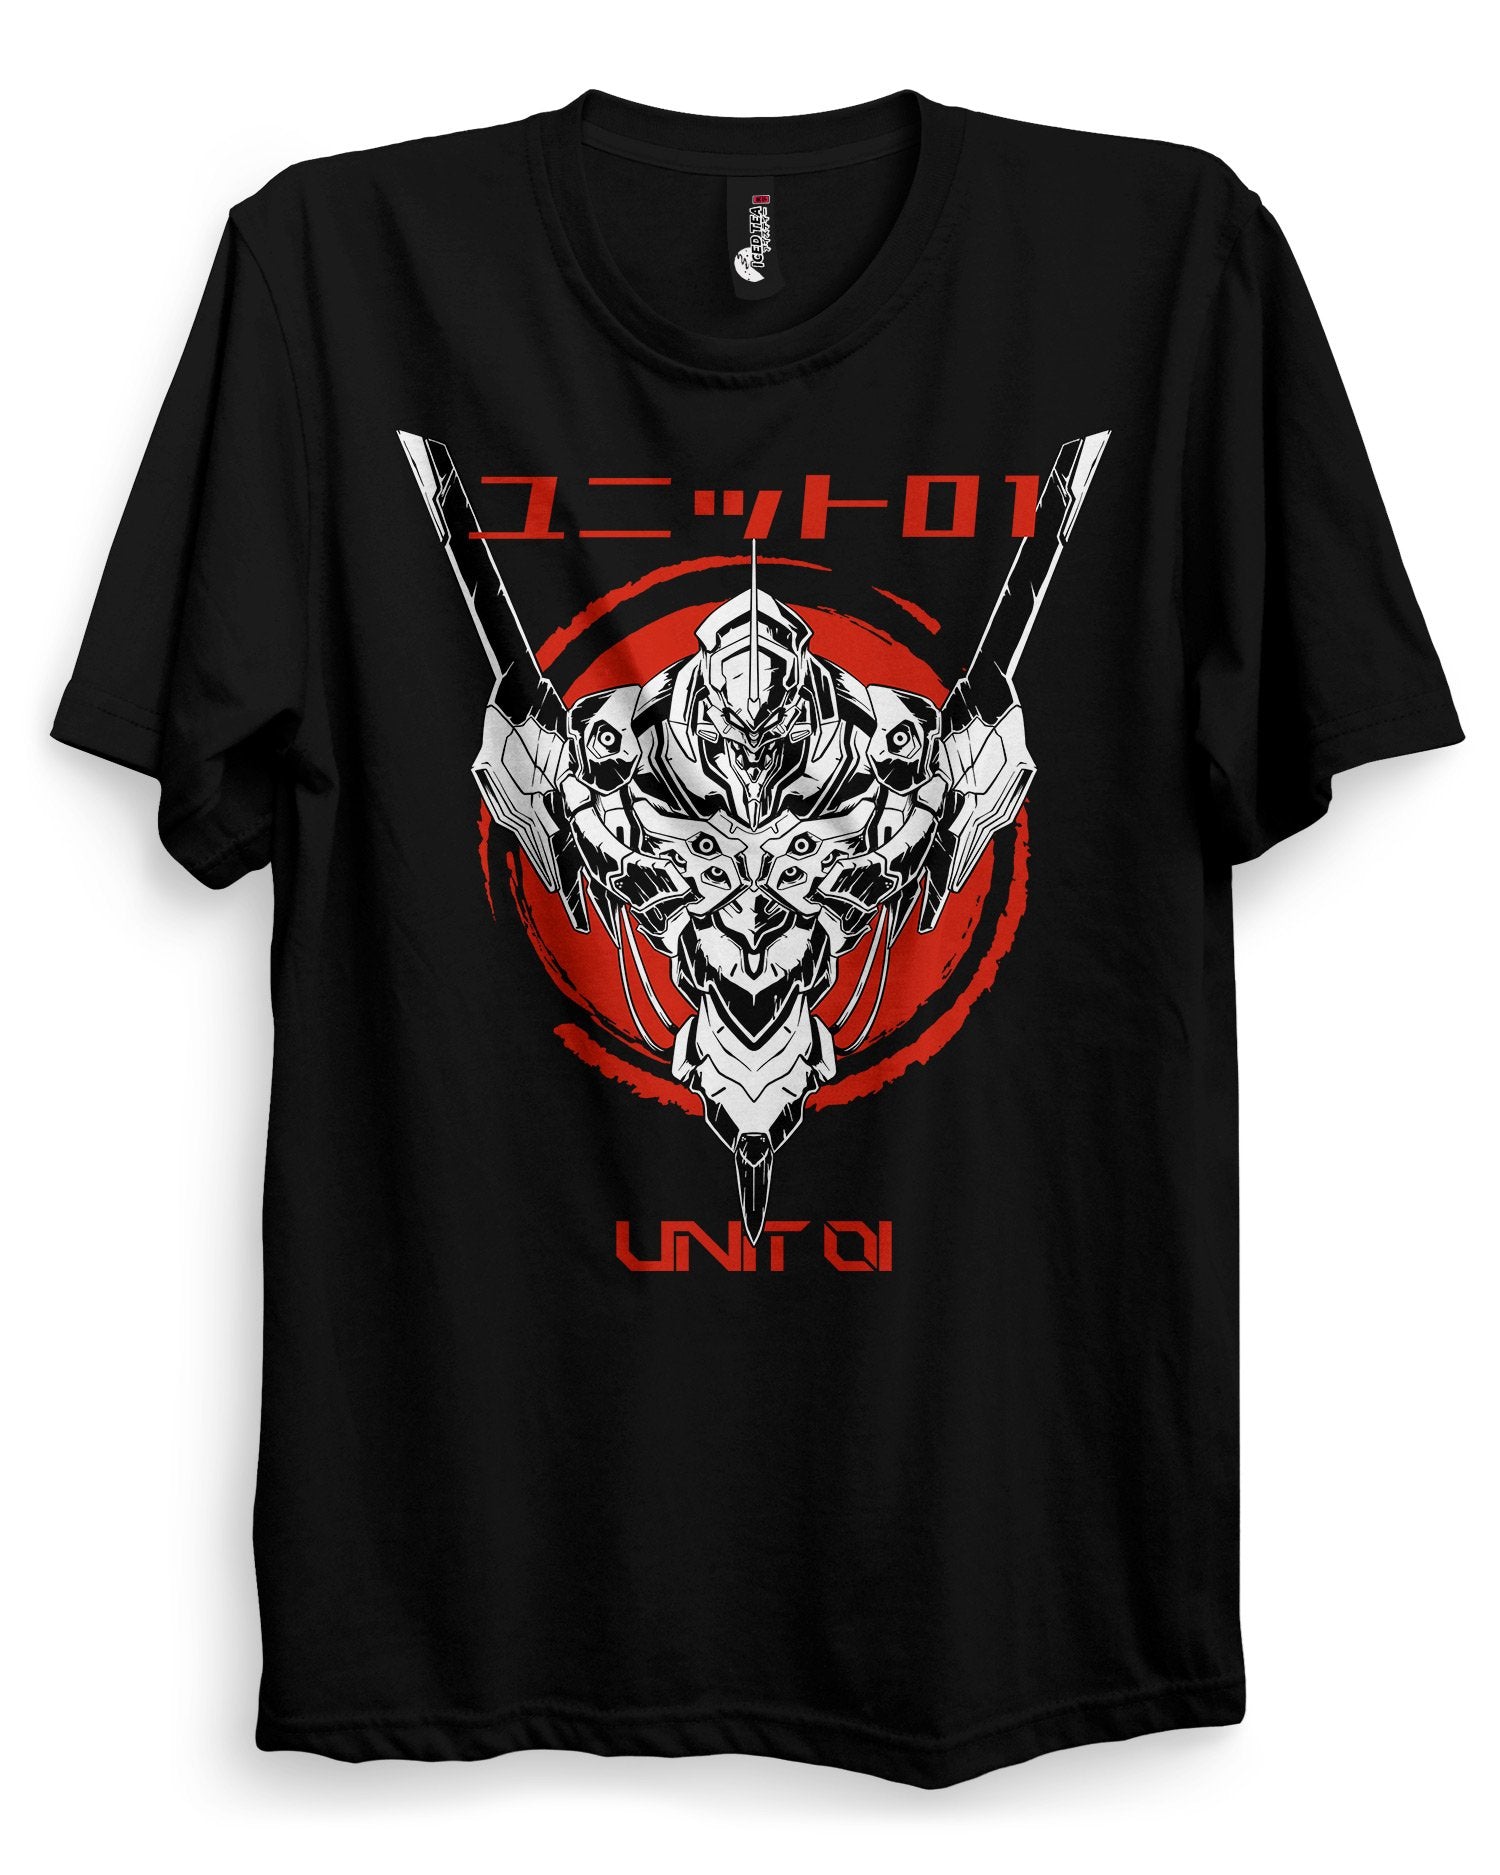 EVA UNIT 01 - Anime T-Shirt - Dark Aesthetics and Anime Clothing Streetwear